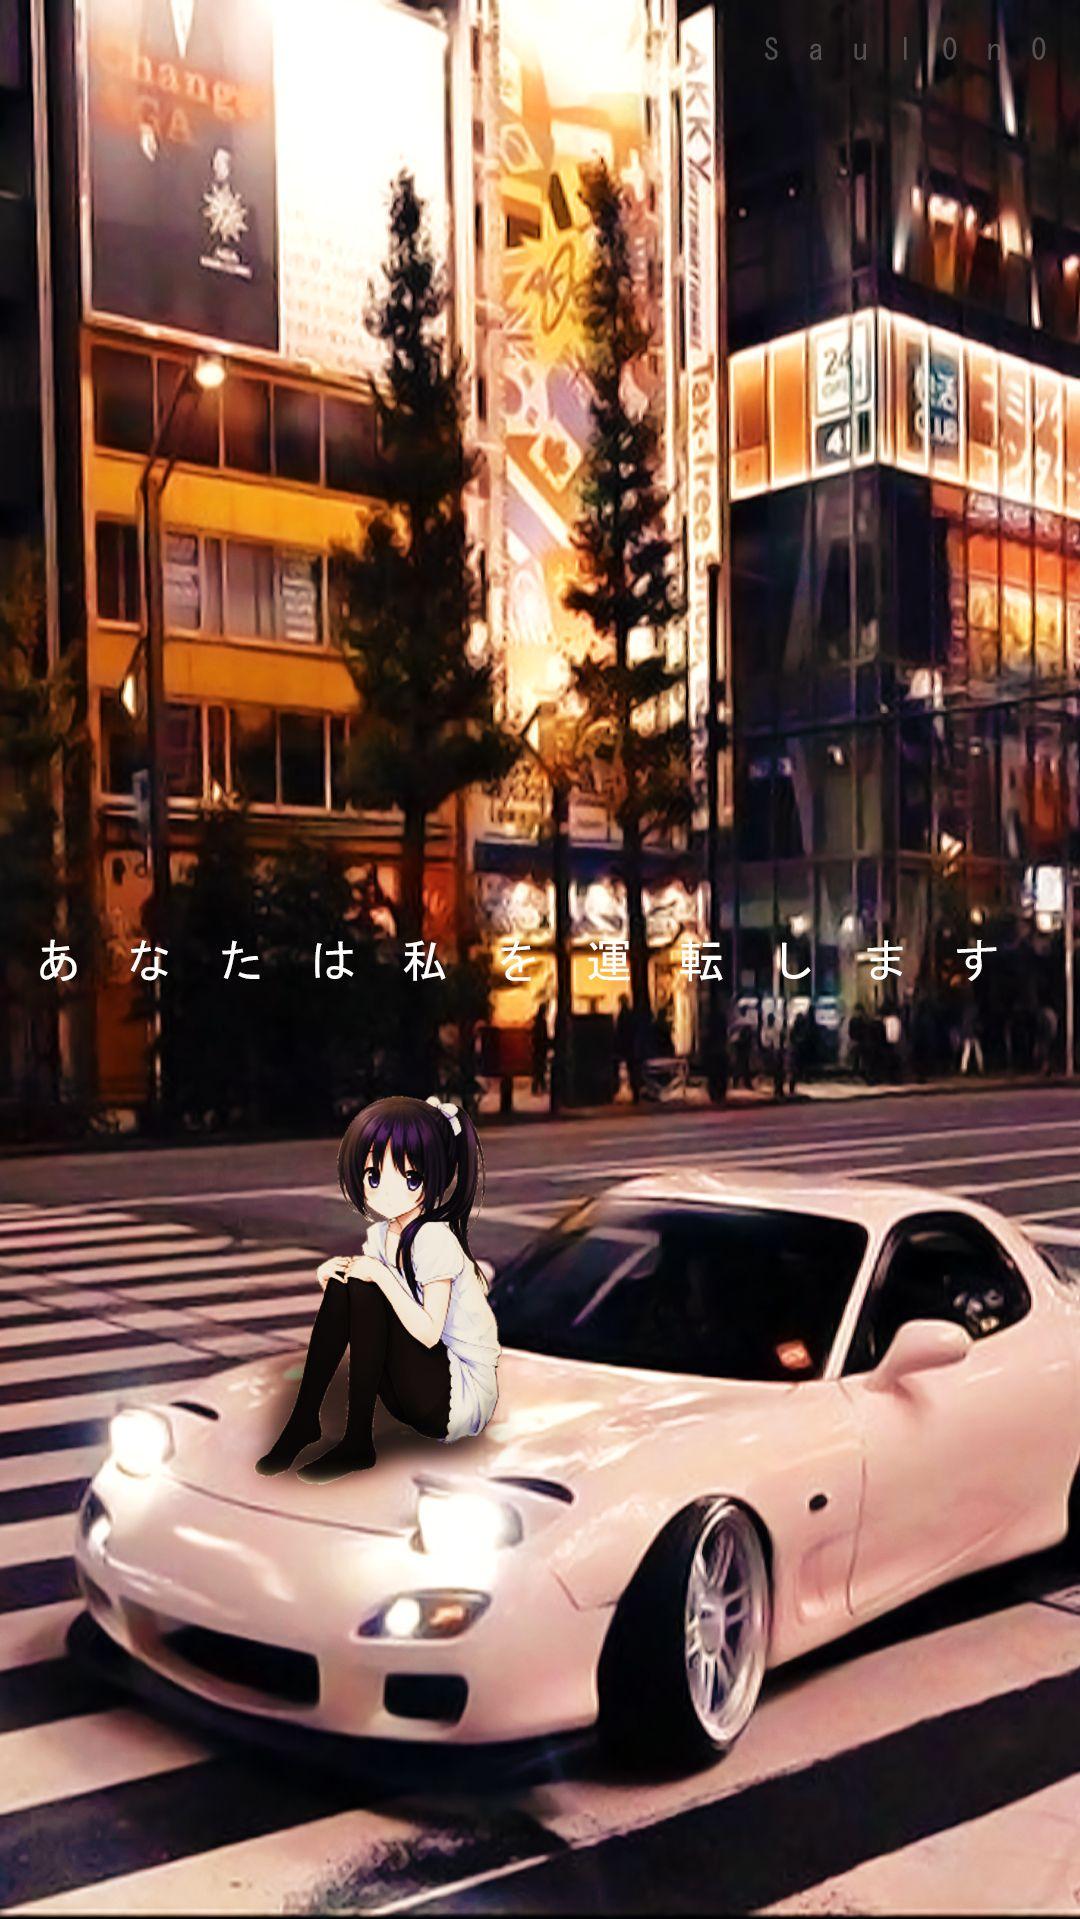 Anime Drift Wallpaper Jdm wallpaper Best jdm cars Car wallpapers